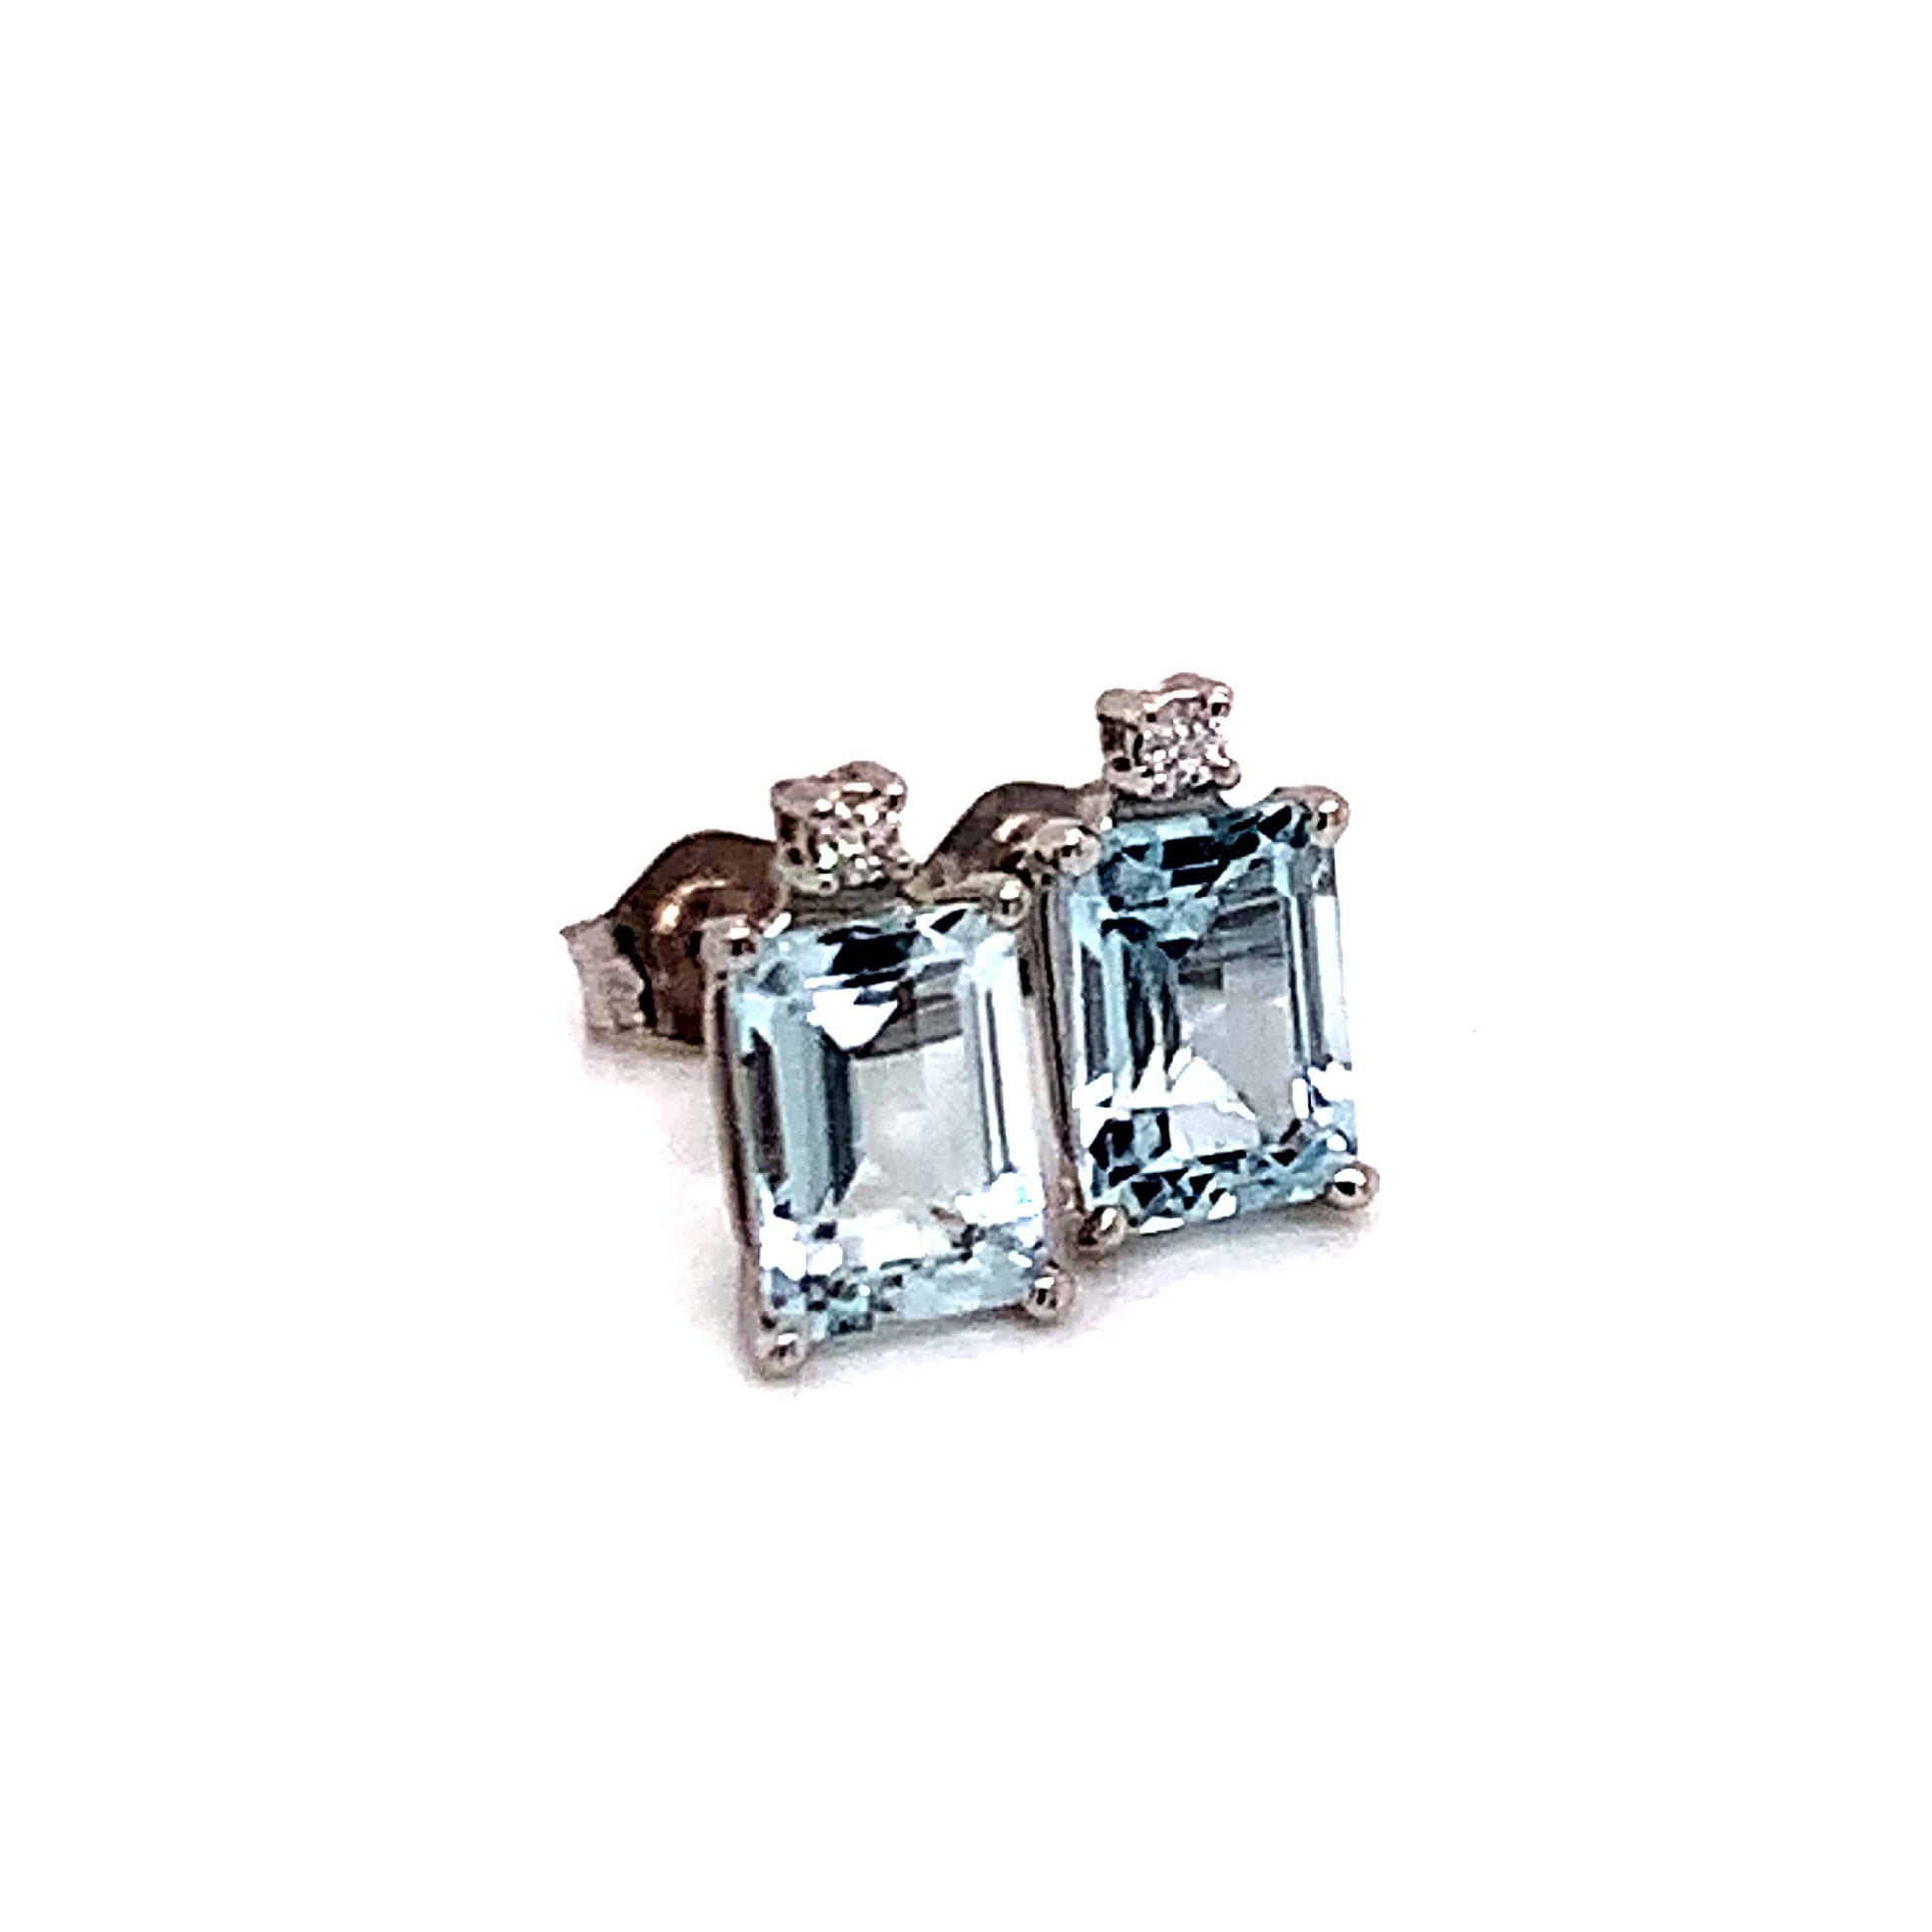 Natural Aquamarine Diamond Earrings 14k WG 1.84 TCW Certified $1,490 018716 - Certified Estate Jewelry